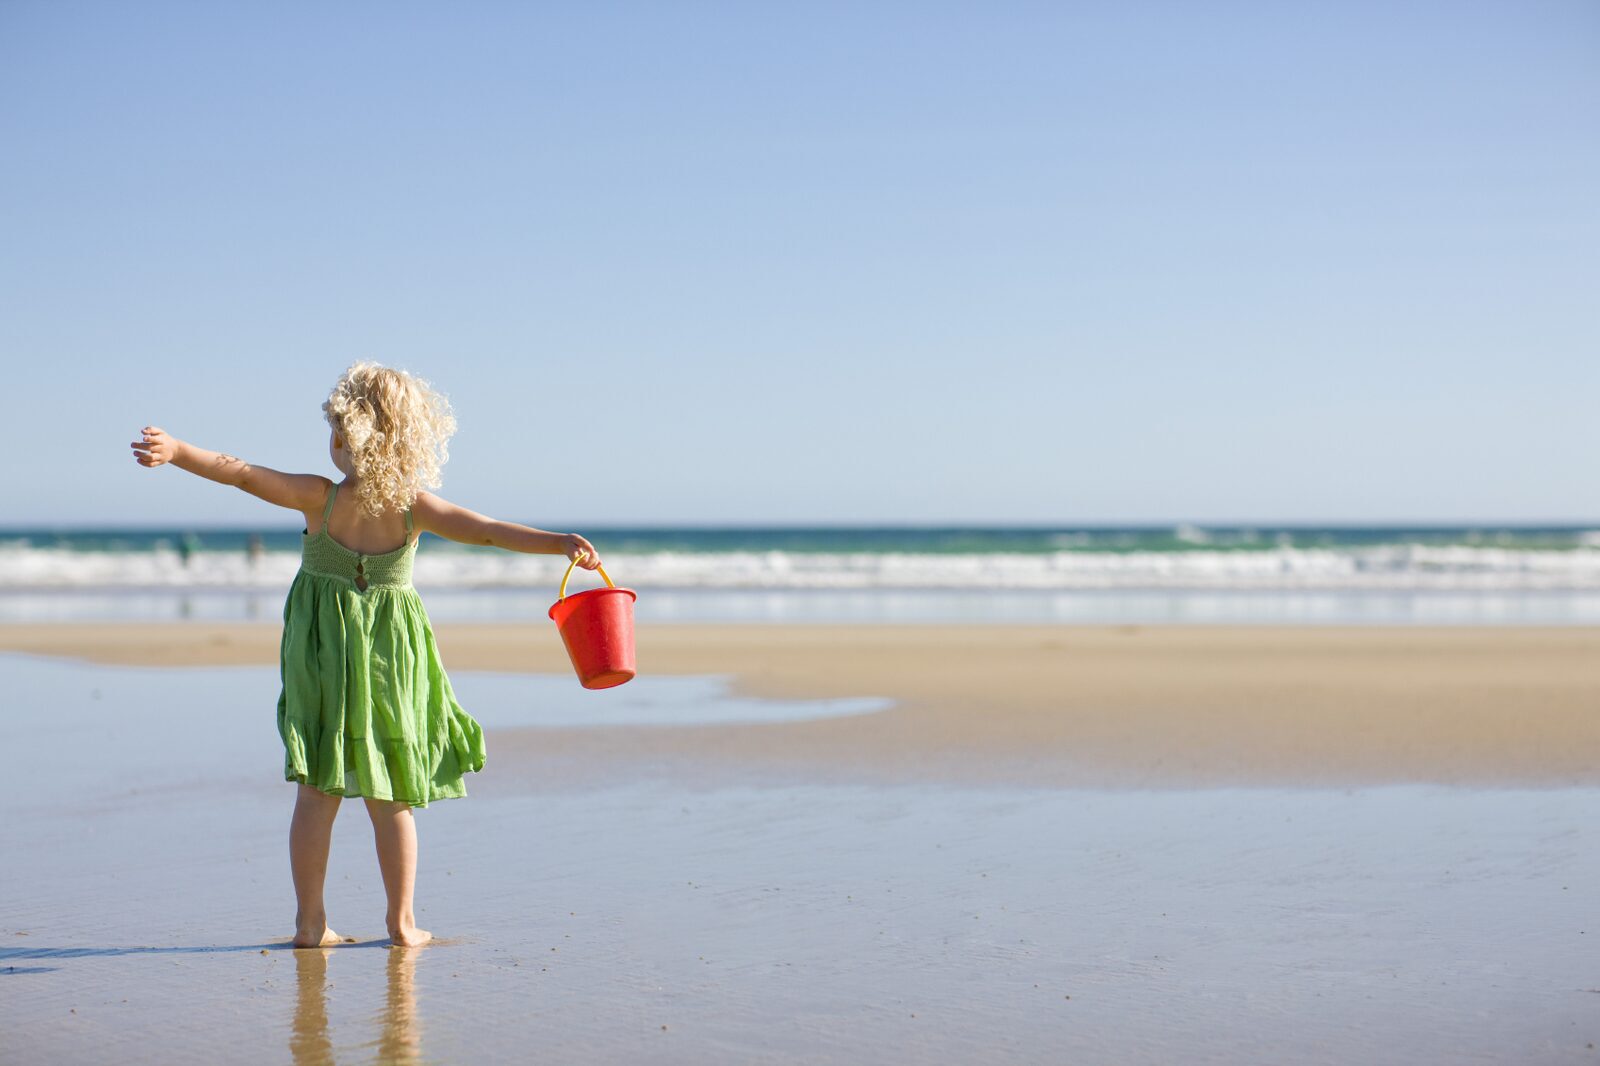 L am on holiday. Лето отпуск. Девочка с ведерком на берегу океана. Семья на пляже. Holidays картинки.